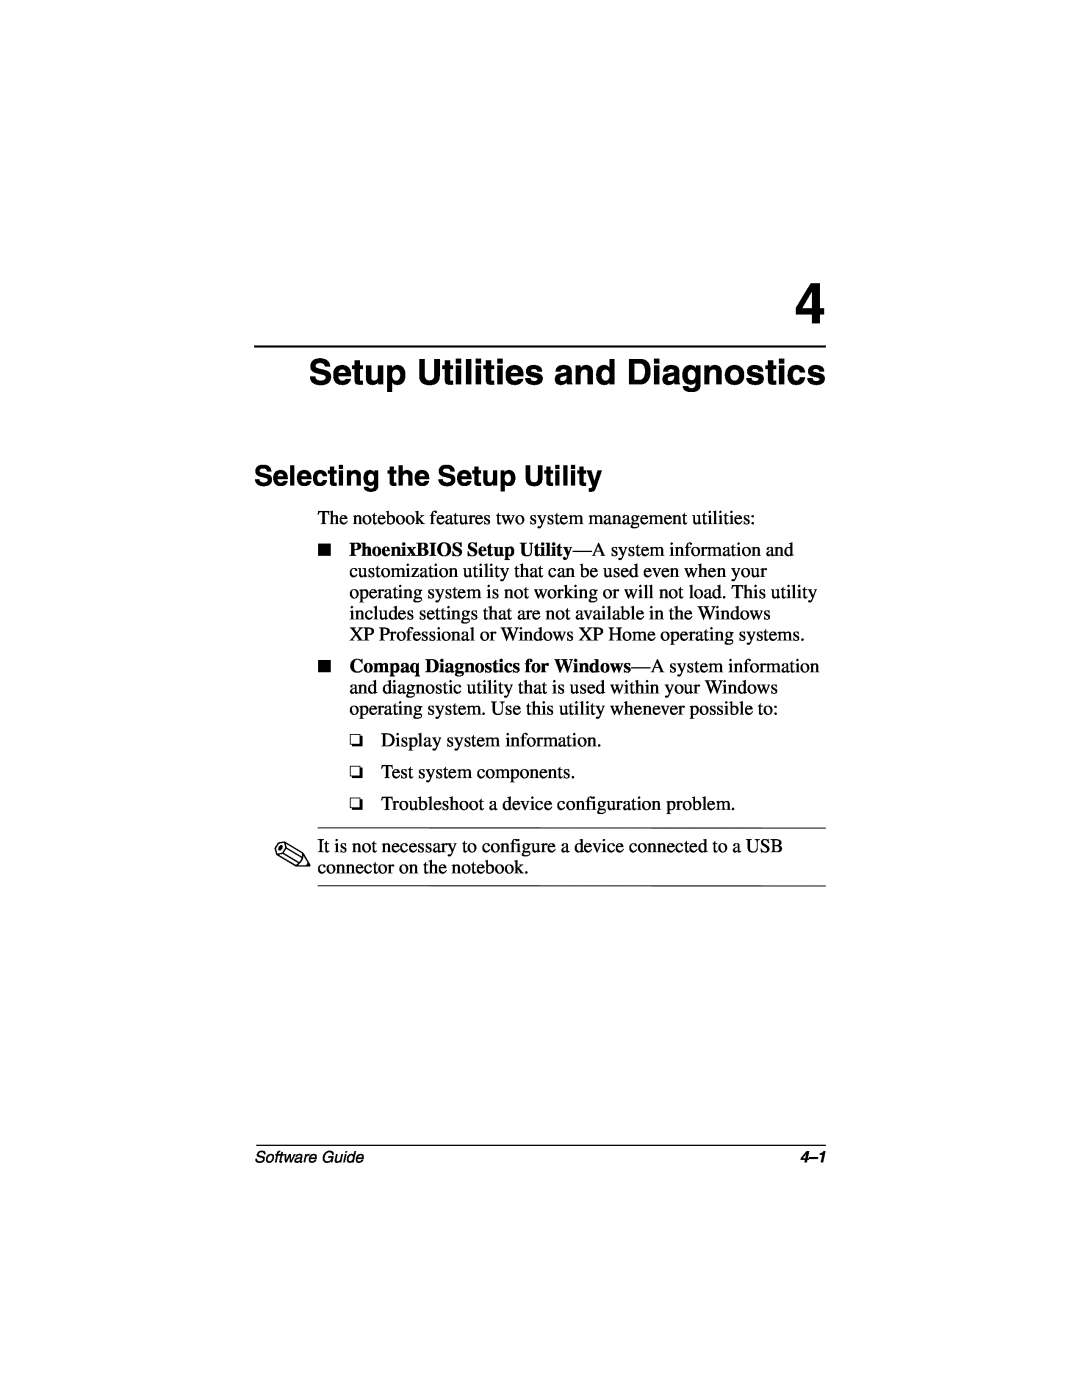 HP 921AP, 955AP, 950AP, 943AP, 940AP, 935AP, 927AP, 930AP, 925EA Setup Utilities and Diagnostics, Selecting the Setup Utility 